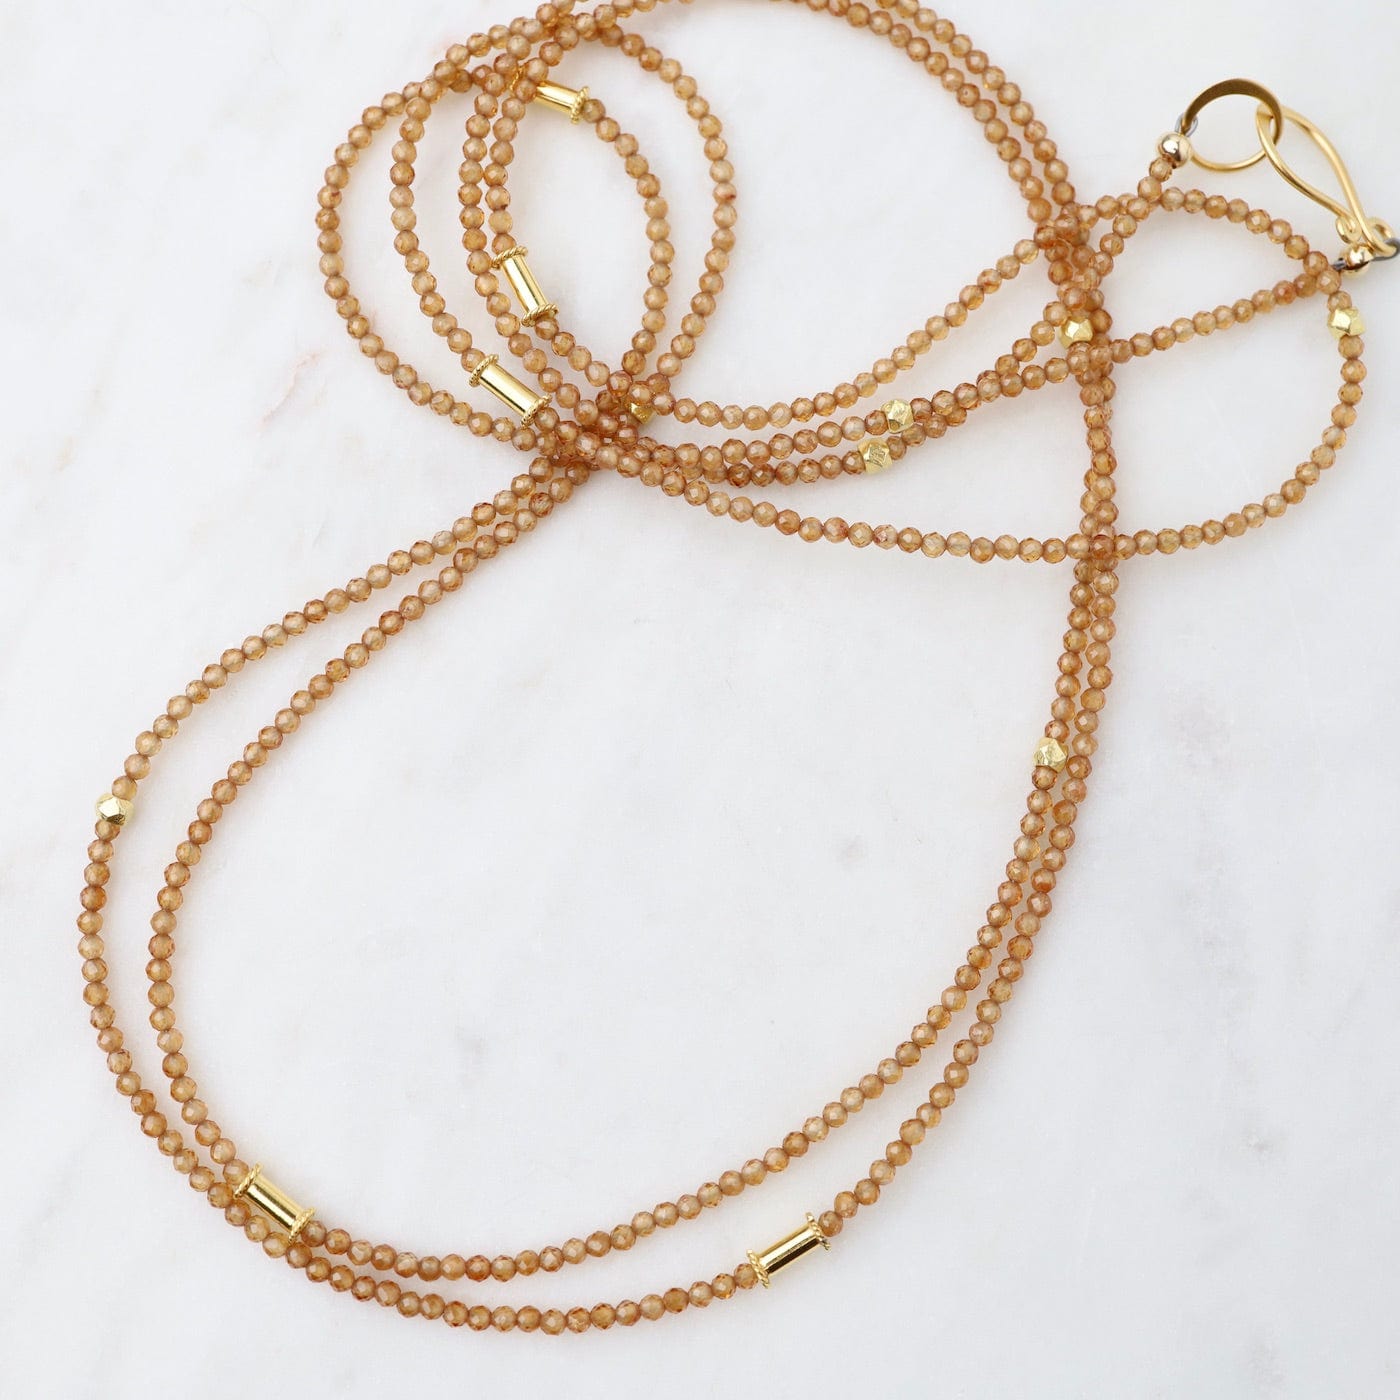 NKL-GF Long Hessonite Garnet & Gold Fill Beads Necklace